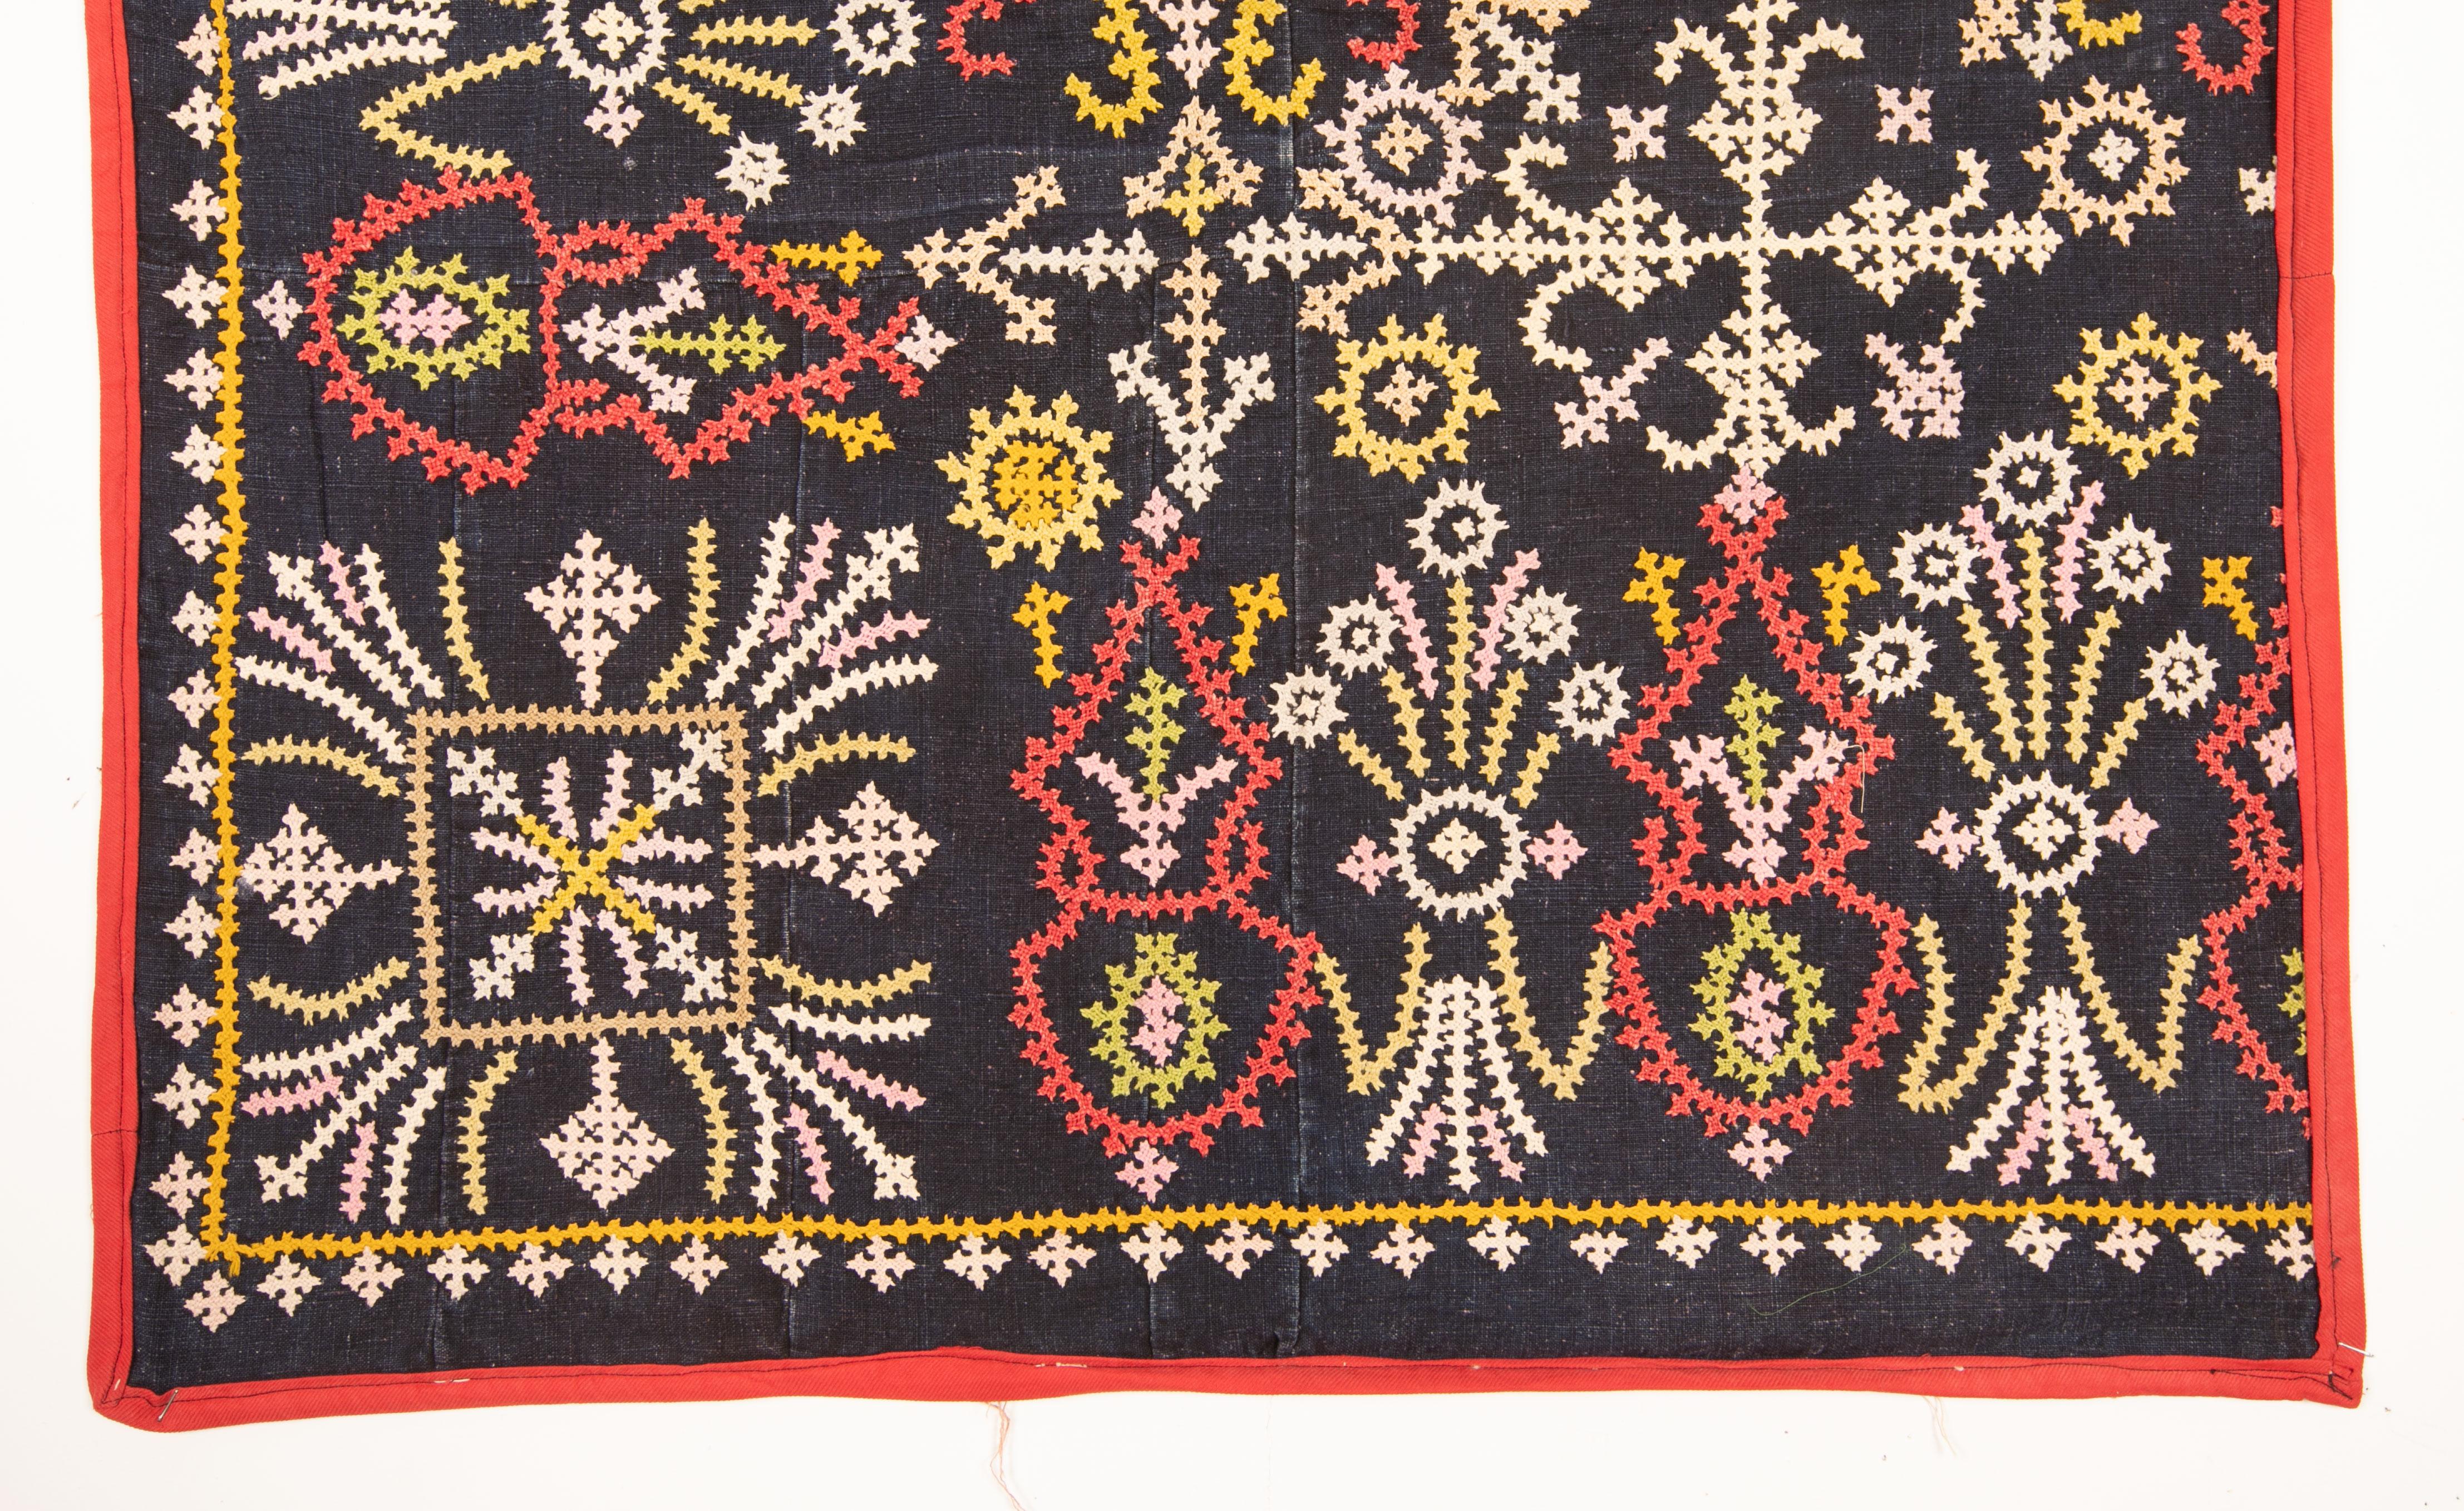 armenian embroidery